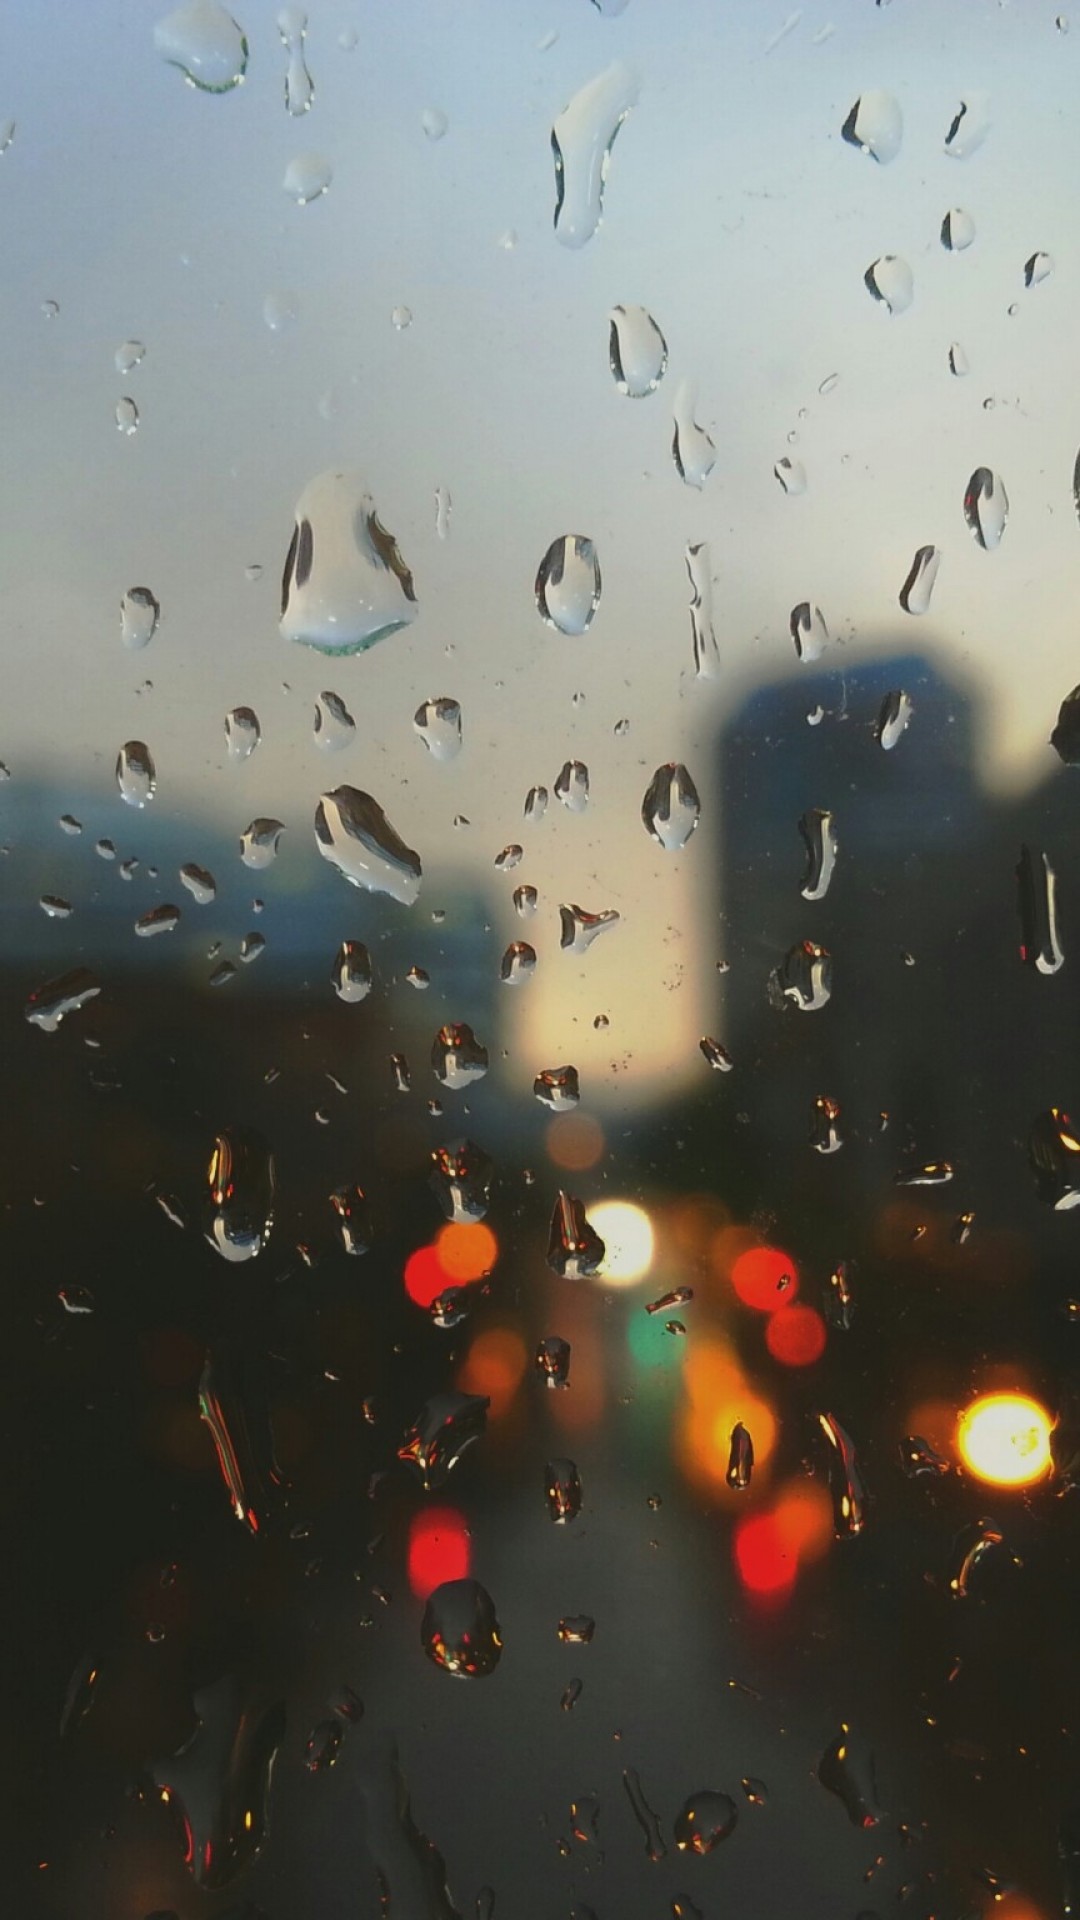 Raindrops on Window Full HD Wallpaper iPhone 6 / 6S Plus ...